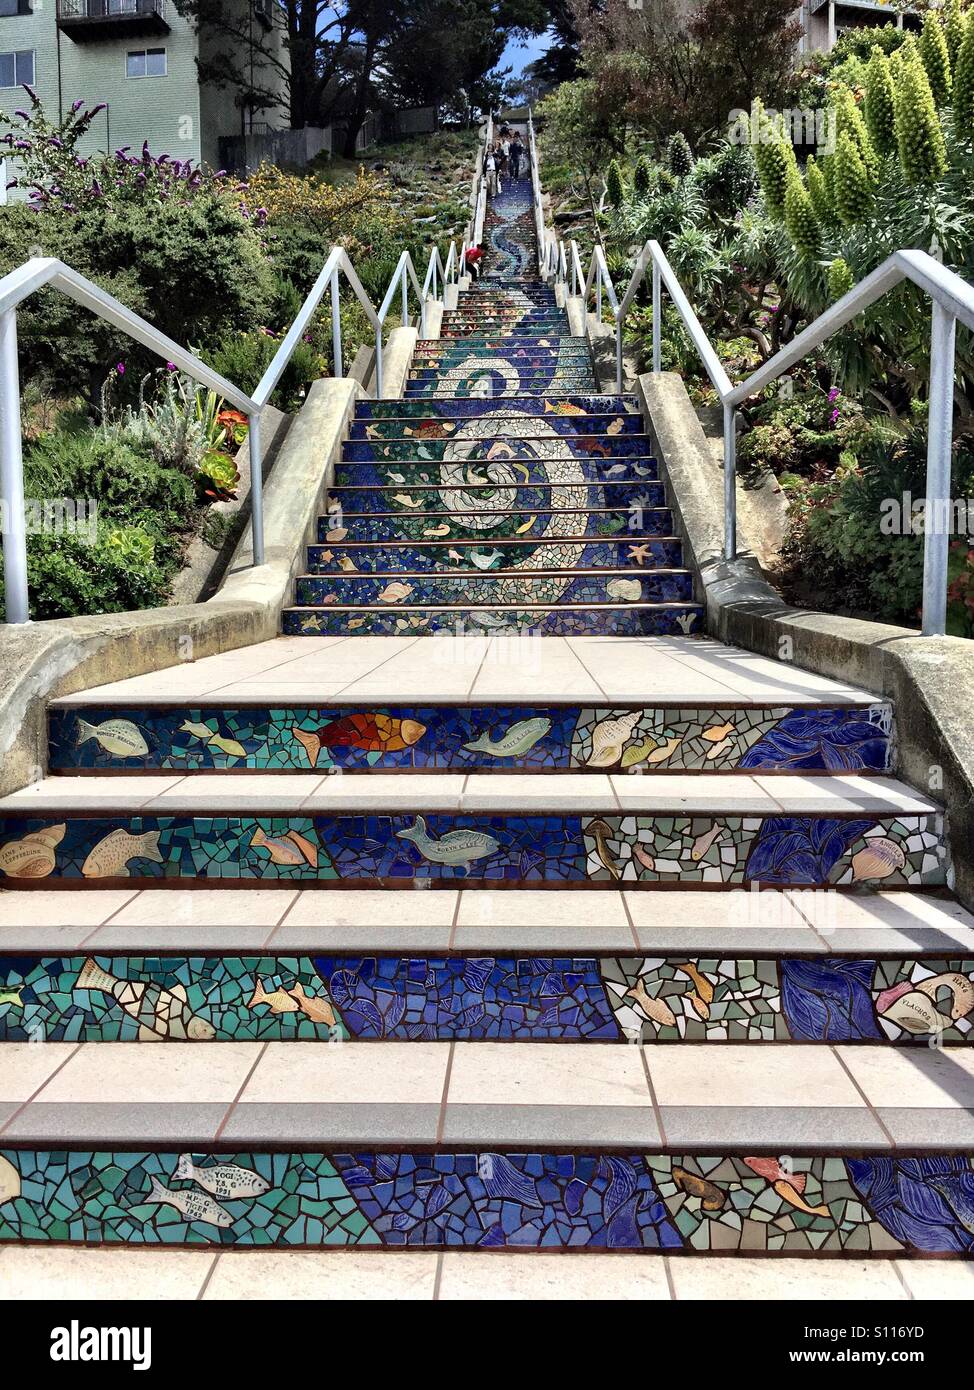 San Grancisco mosaic steps Stock Photo